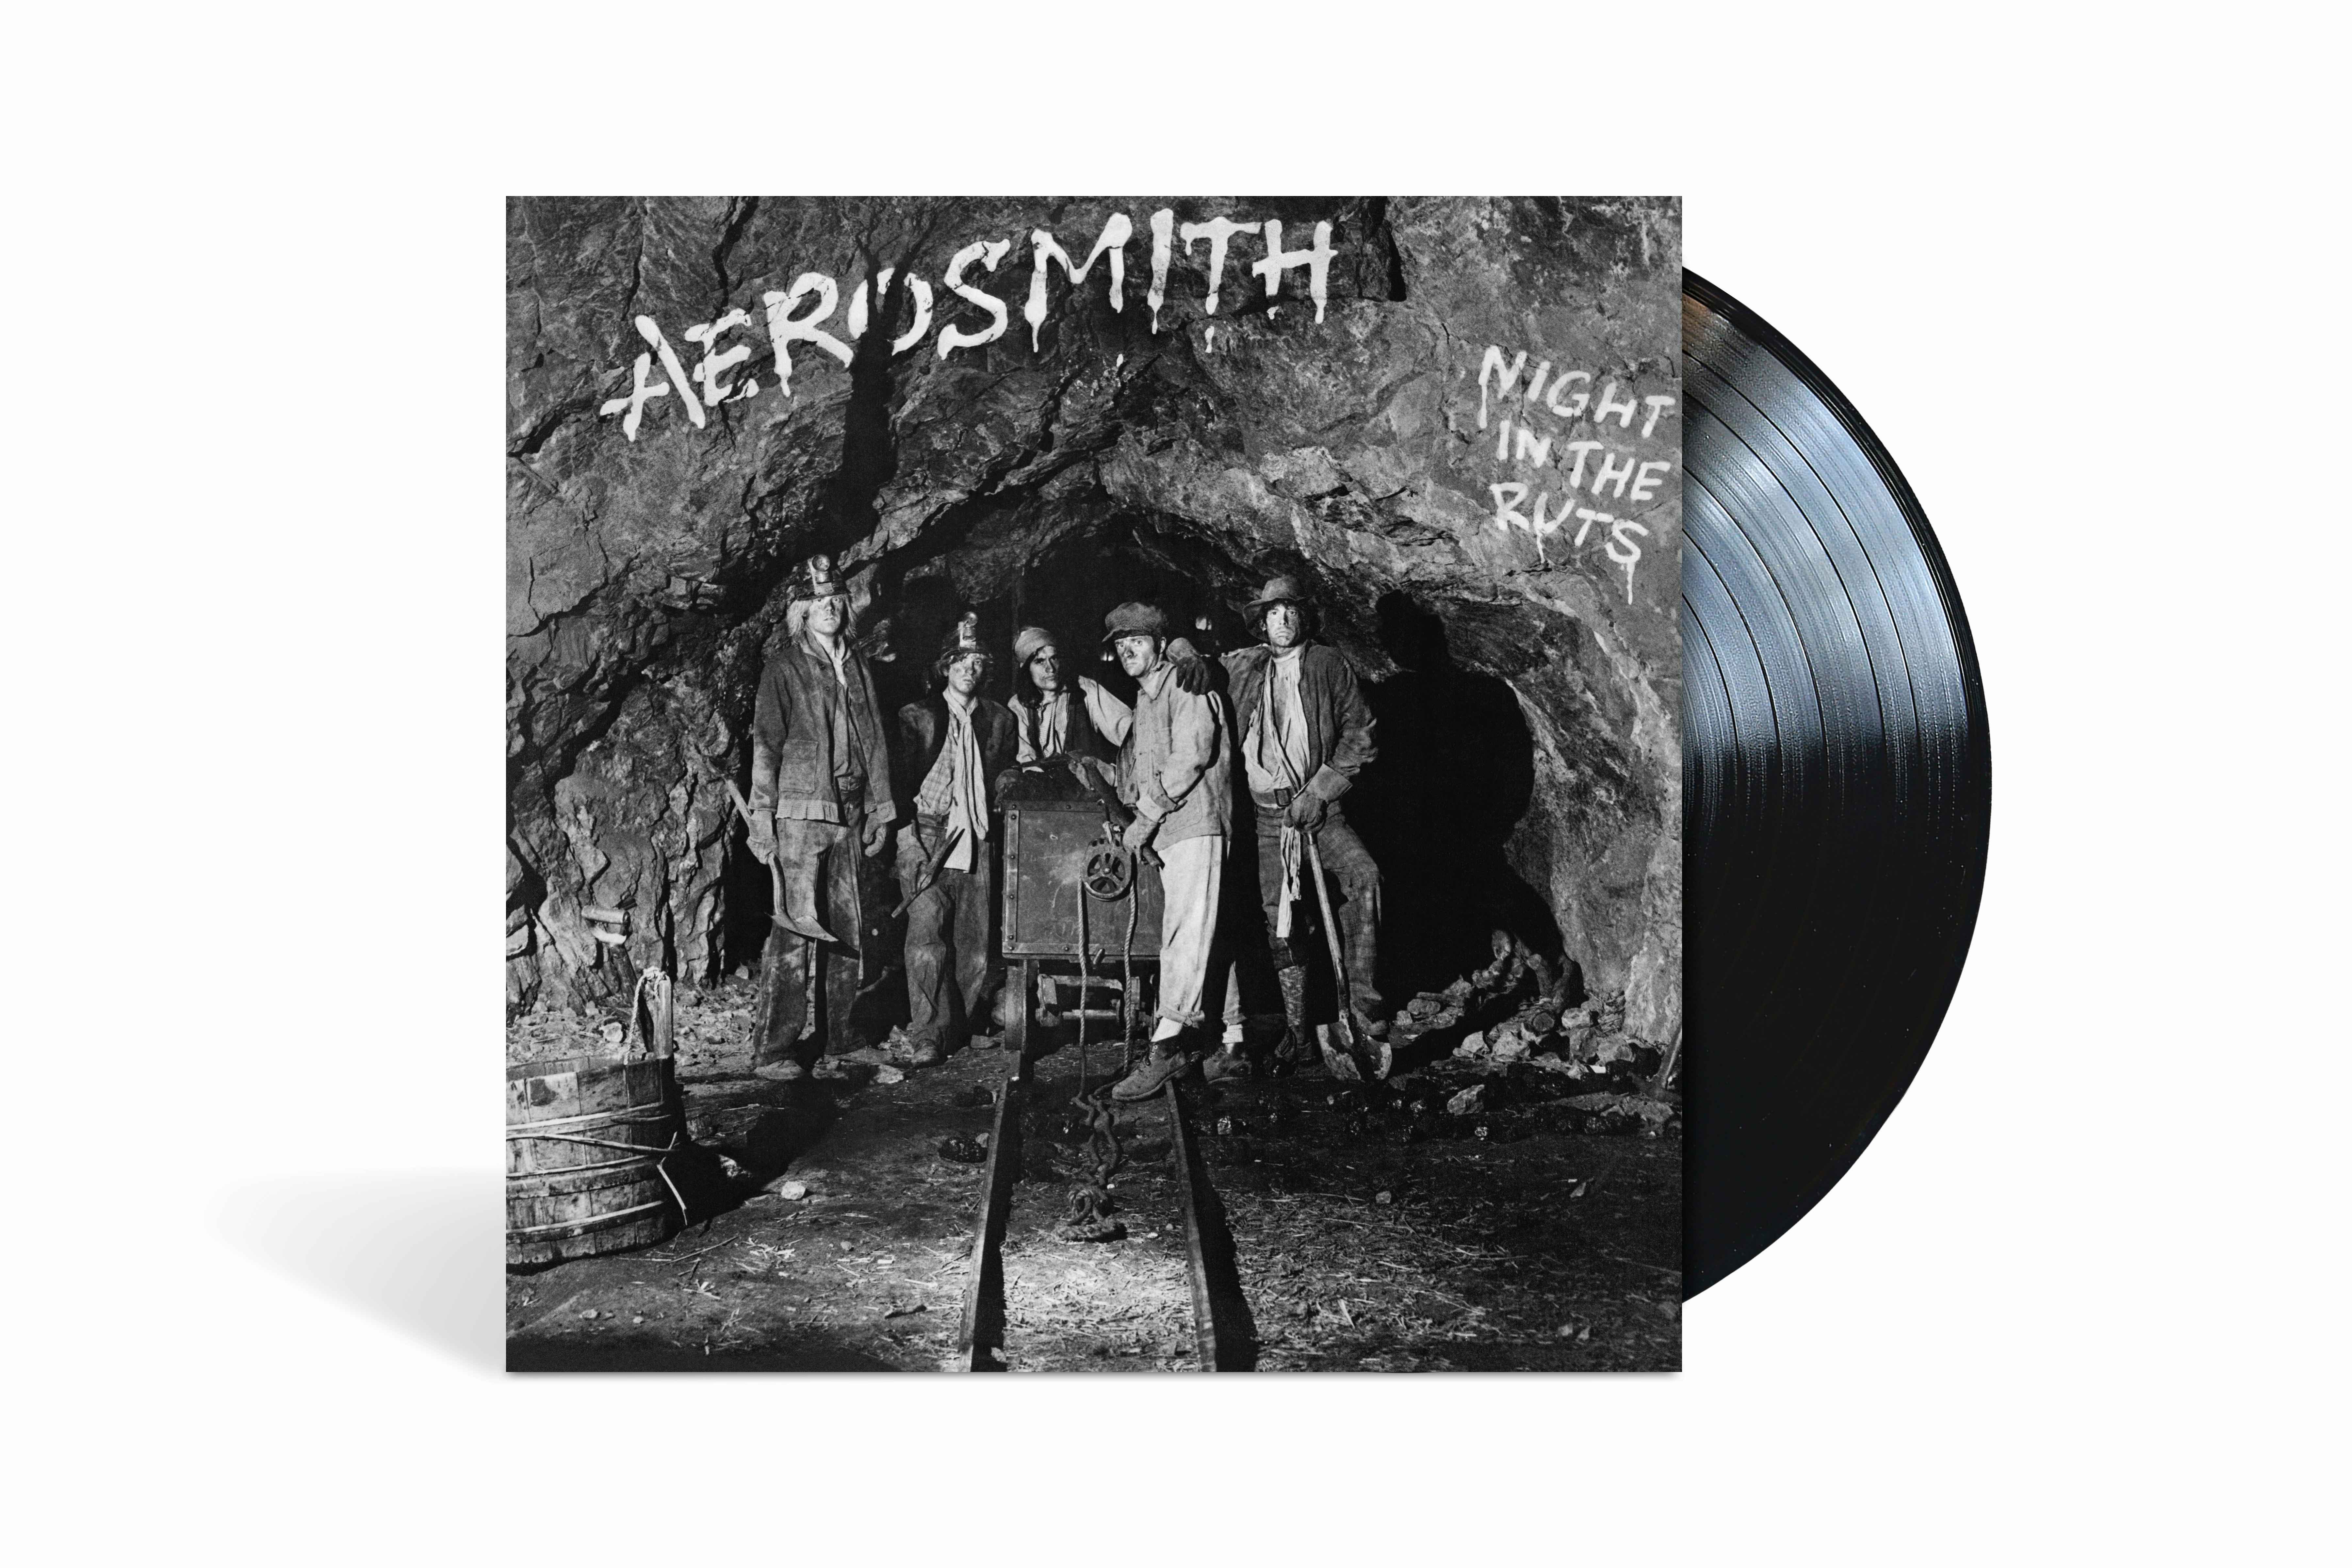 CD Shop - AEROSMITH NIGHT IN THE RUTS